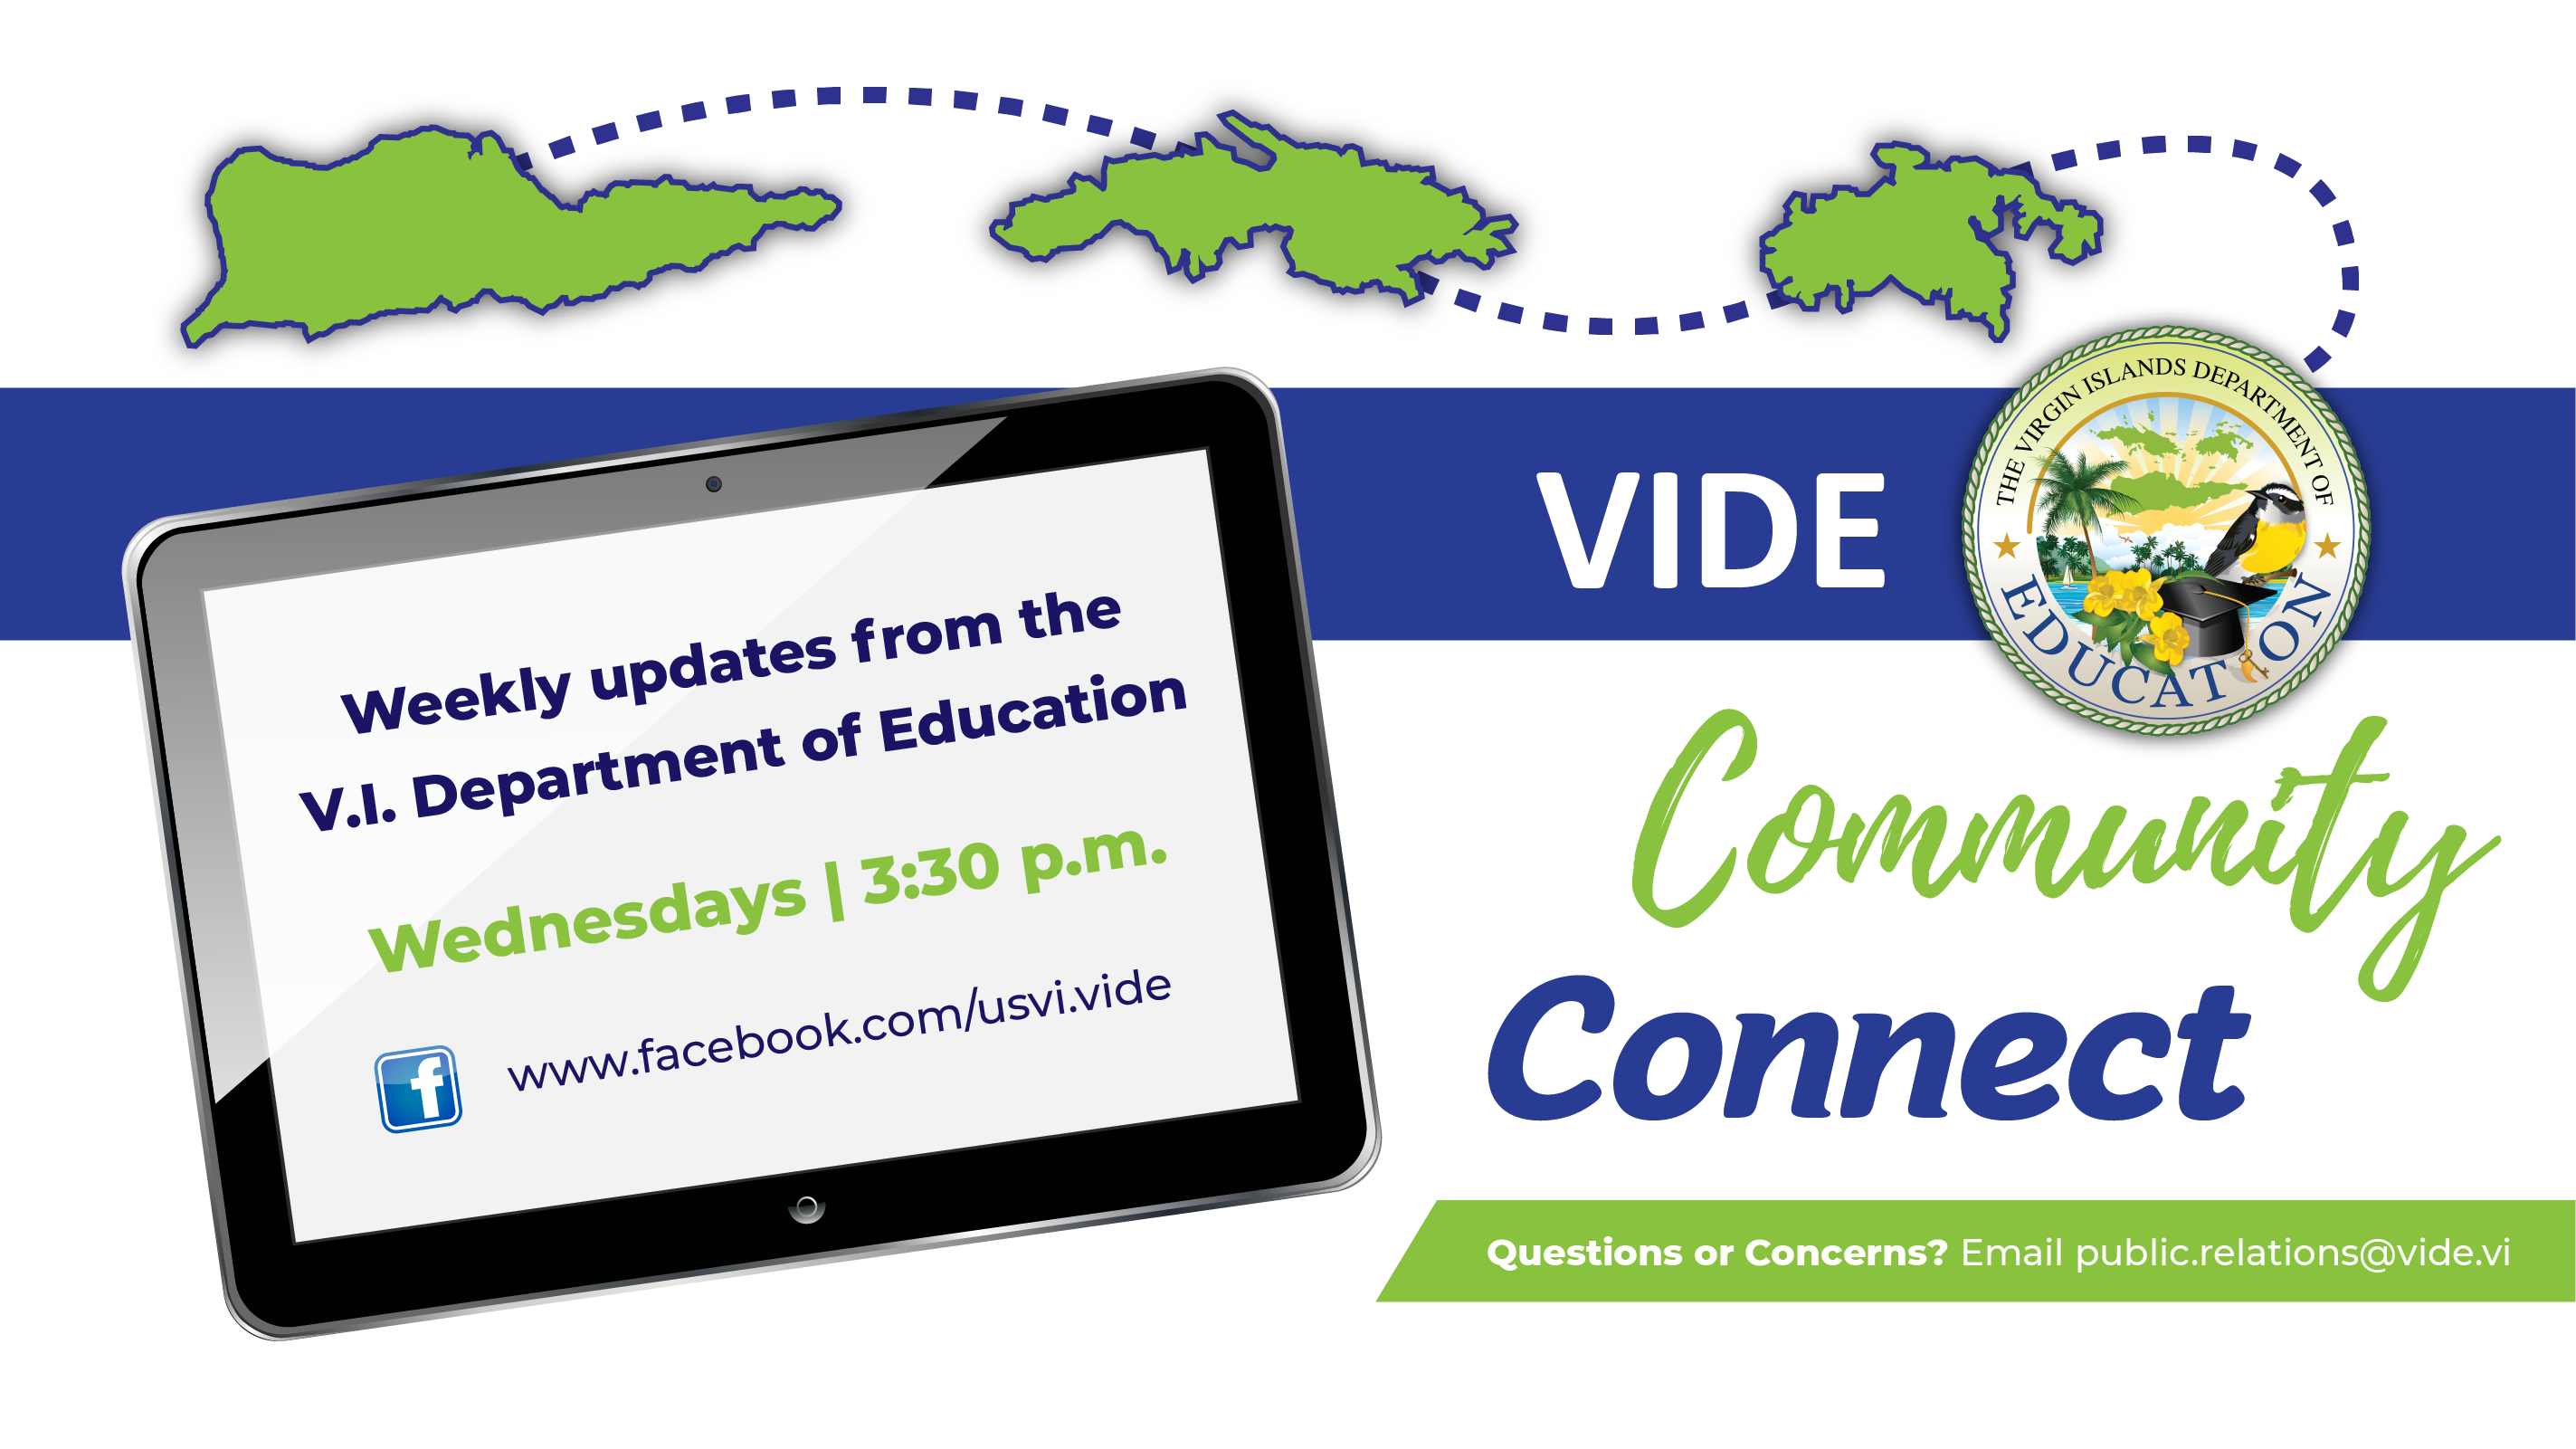 VIDE Community Connect | Wednesdays @ 3:30 p.m. on Facebook Live